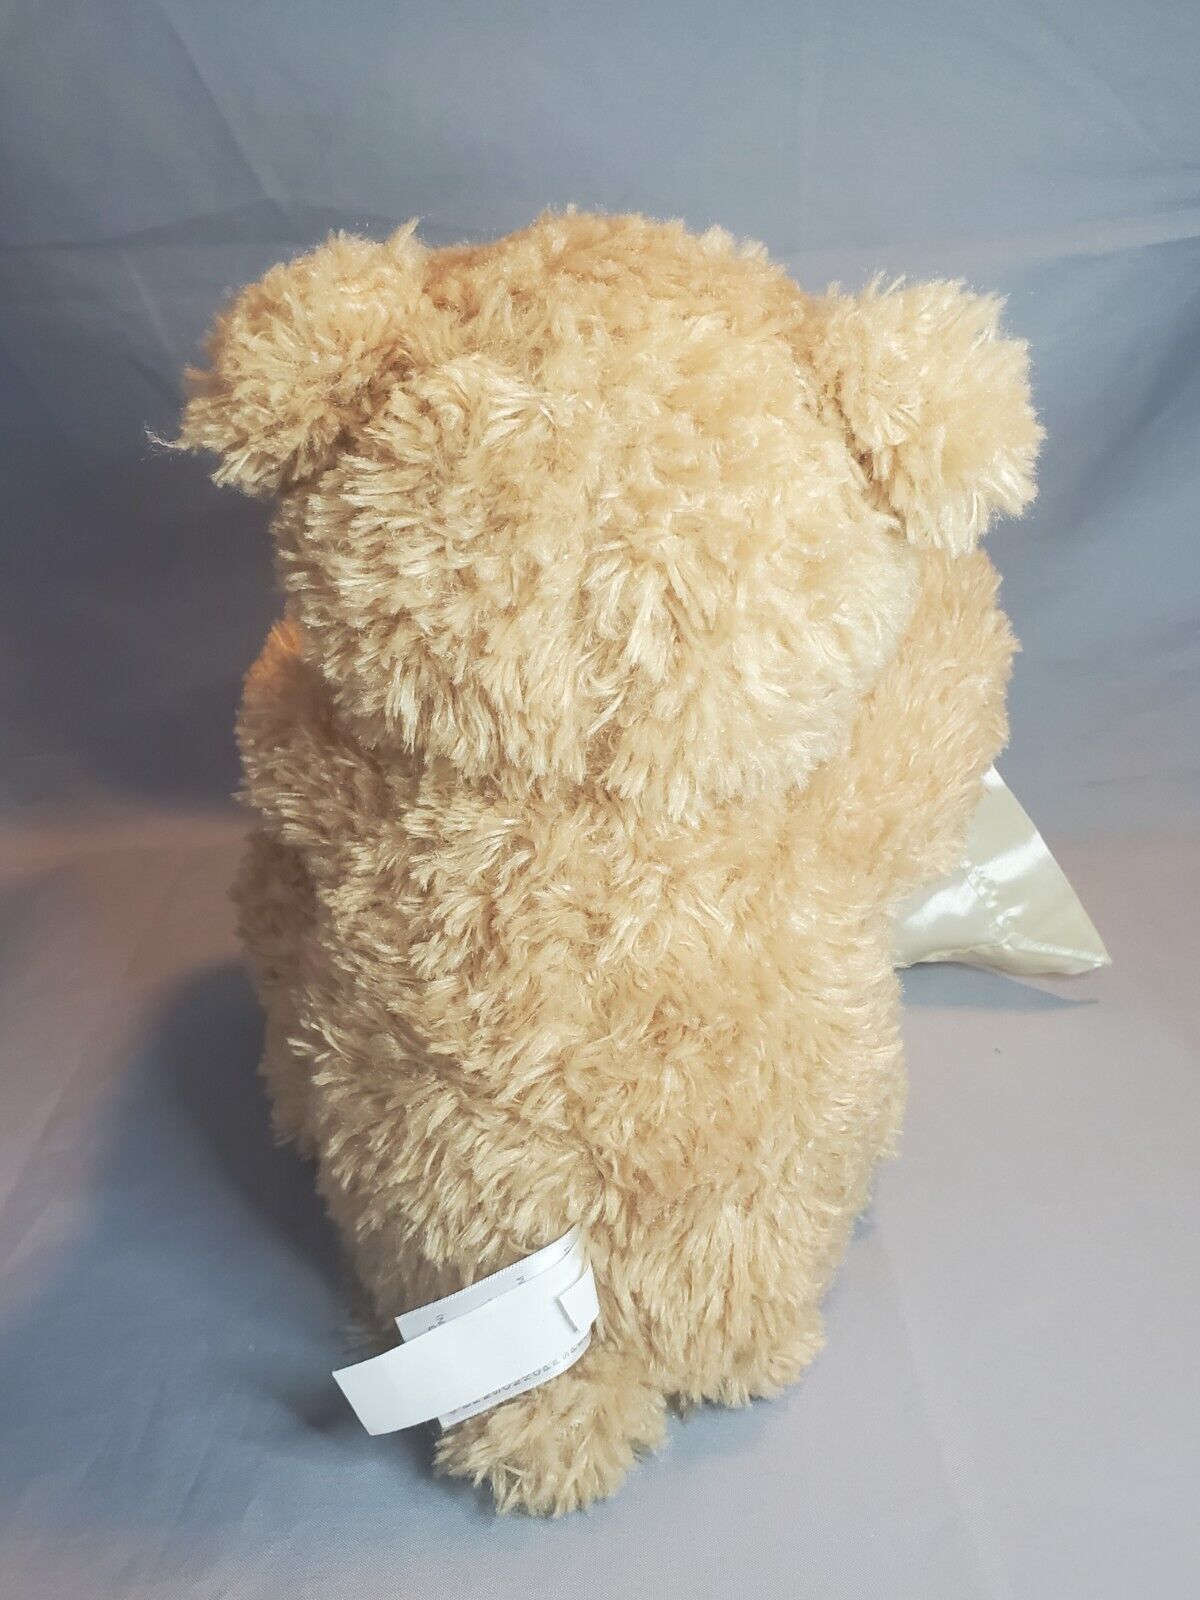 Gund Peek-A-Boo Bear Brown 11.5 Inch Stuffed Toys